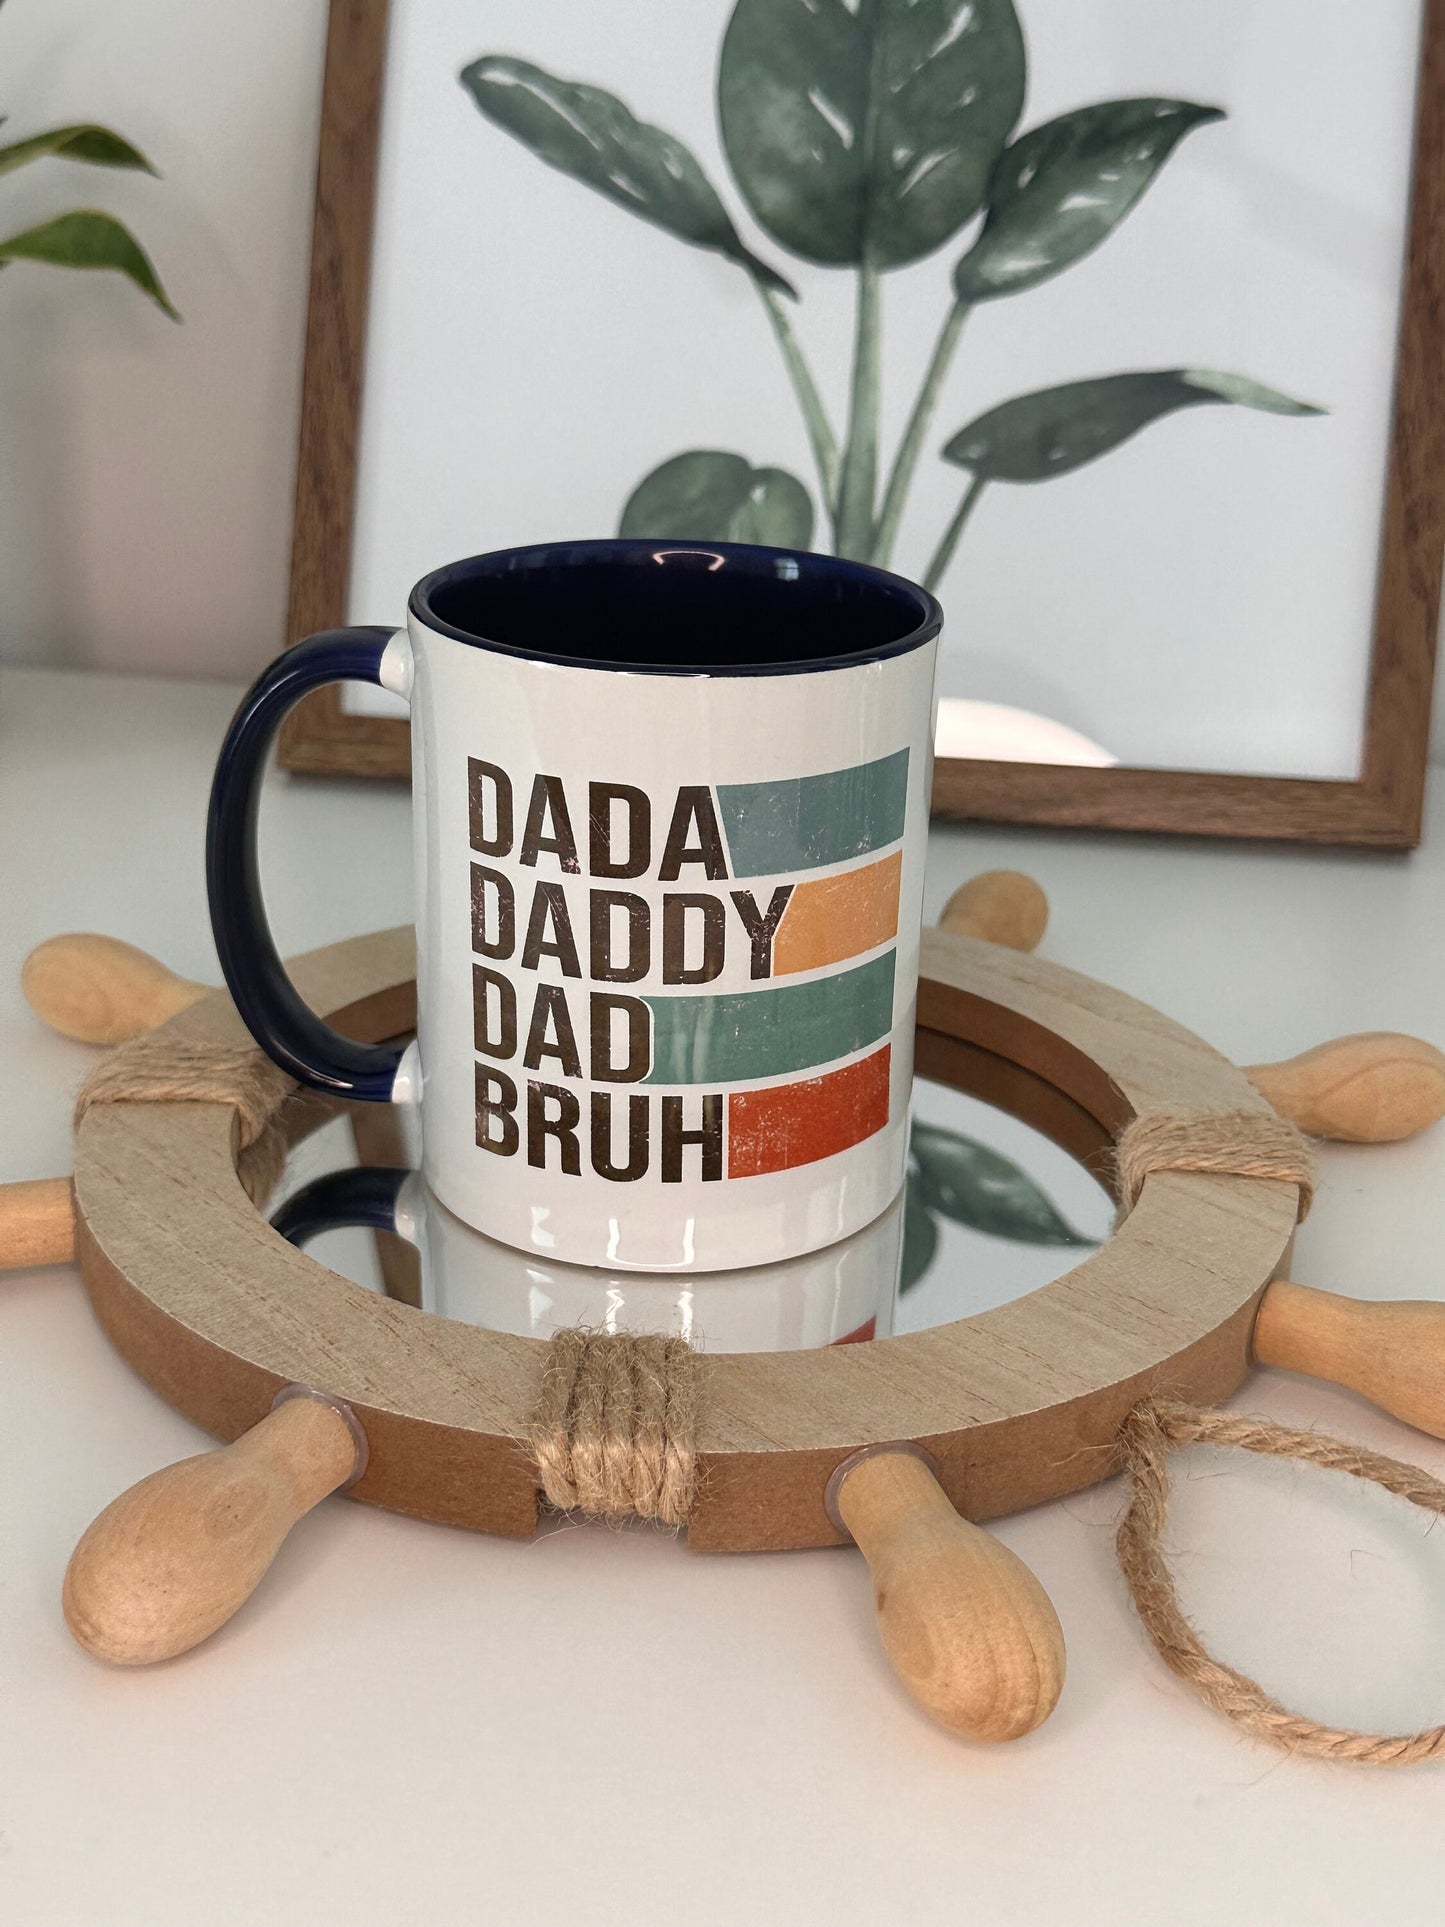 Dad, Daddy, Dad, Bruh Ceramic Mug